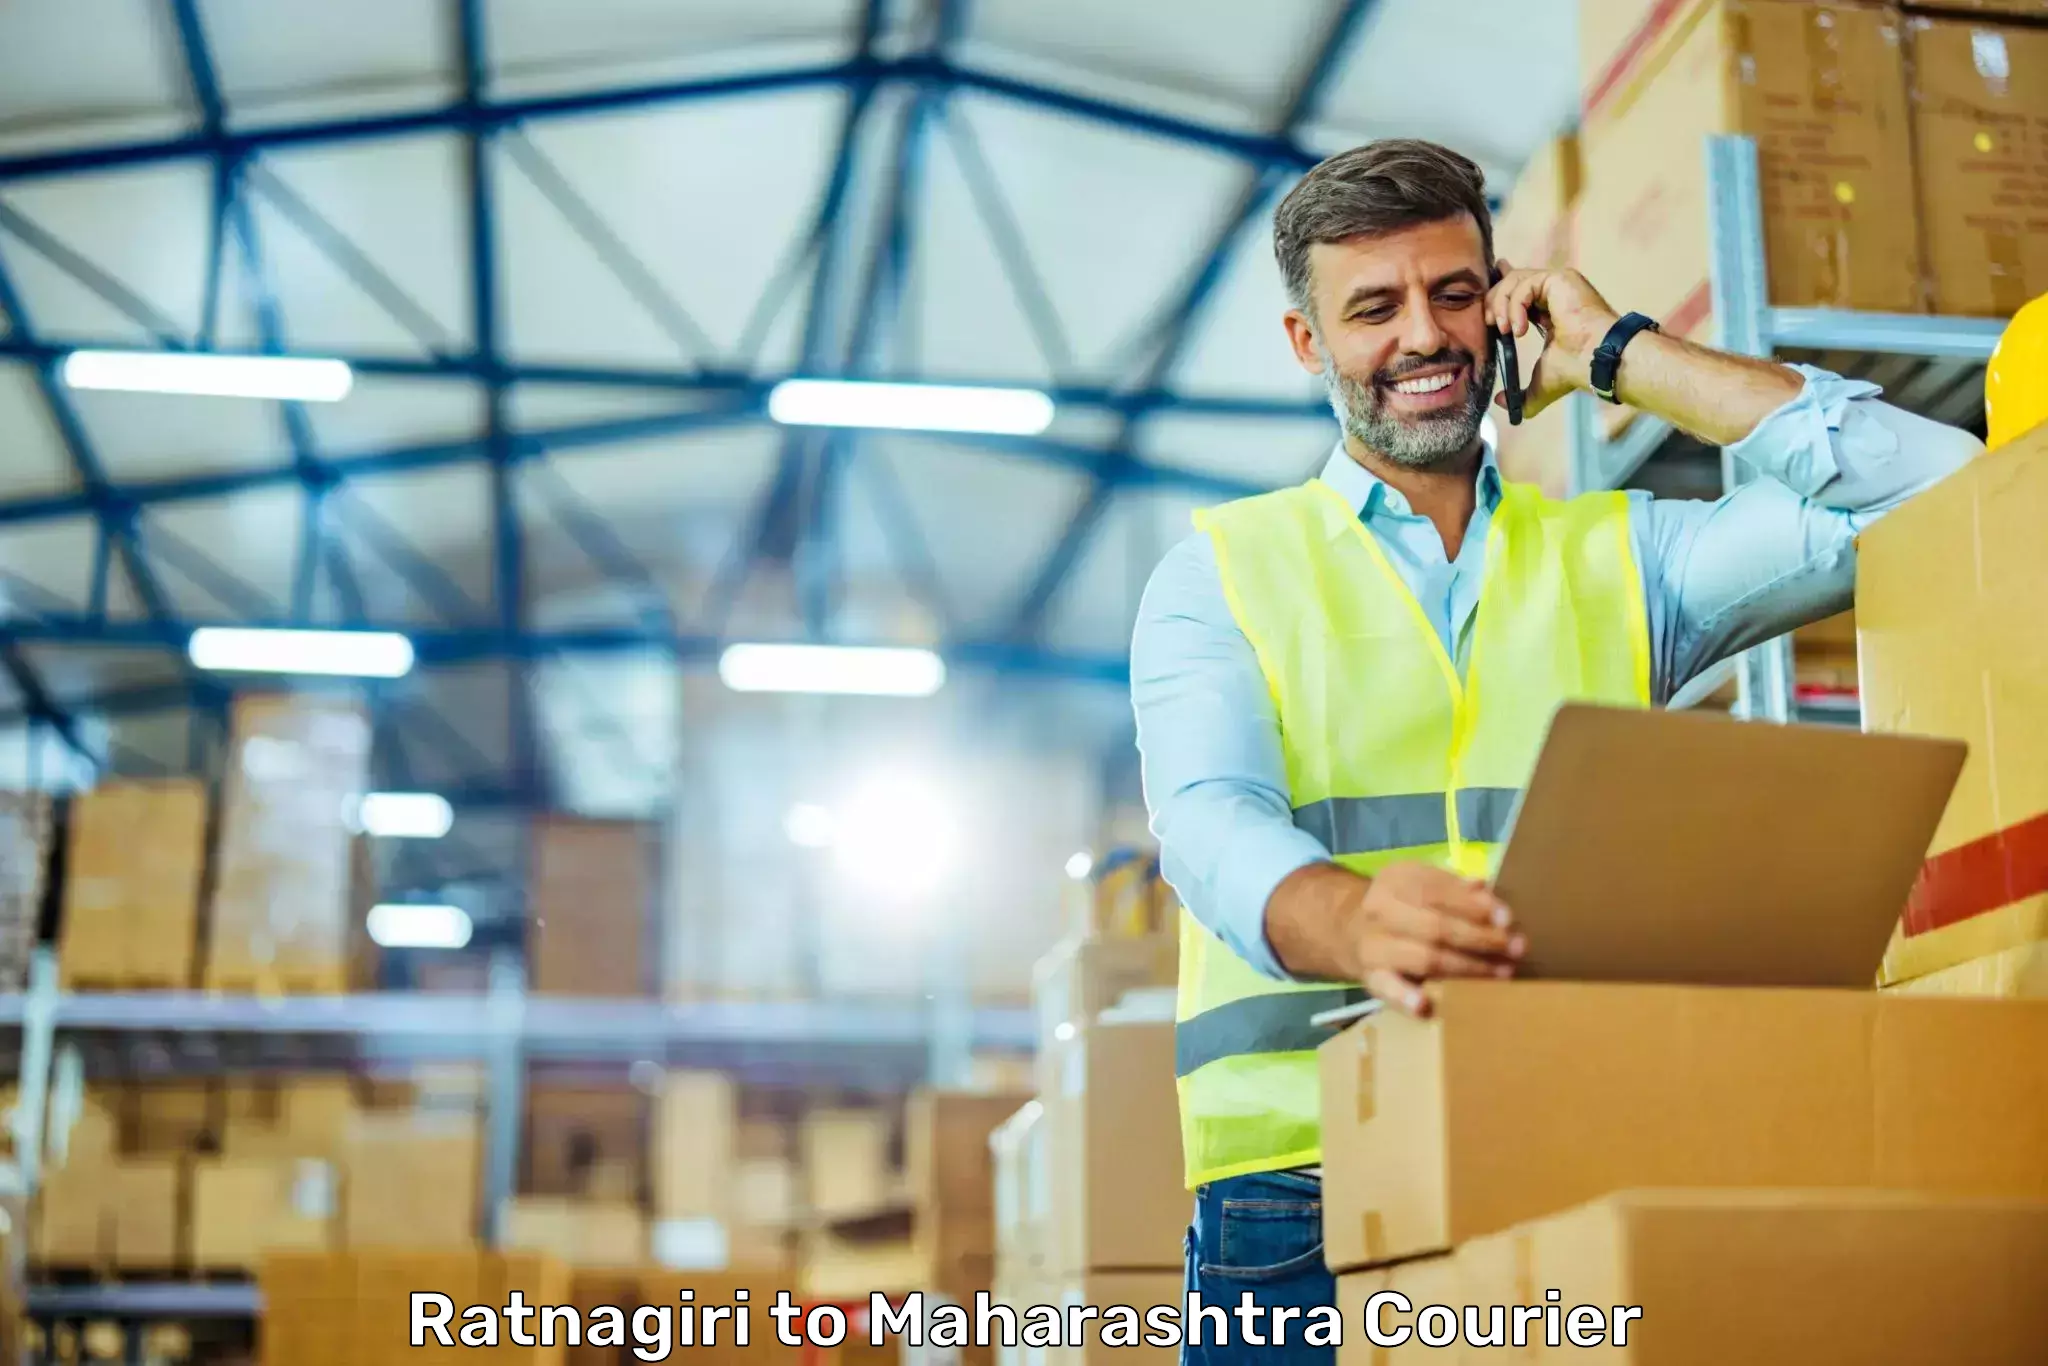 Courier service efficiency in Ratnagiri to Maharashtra